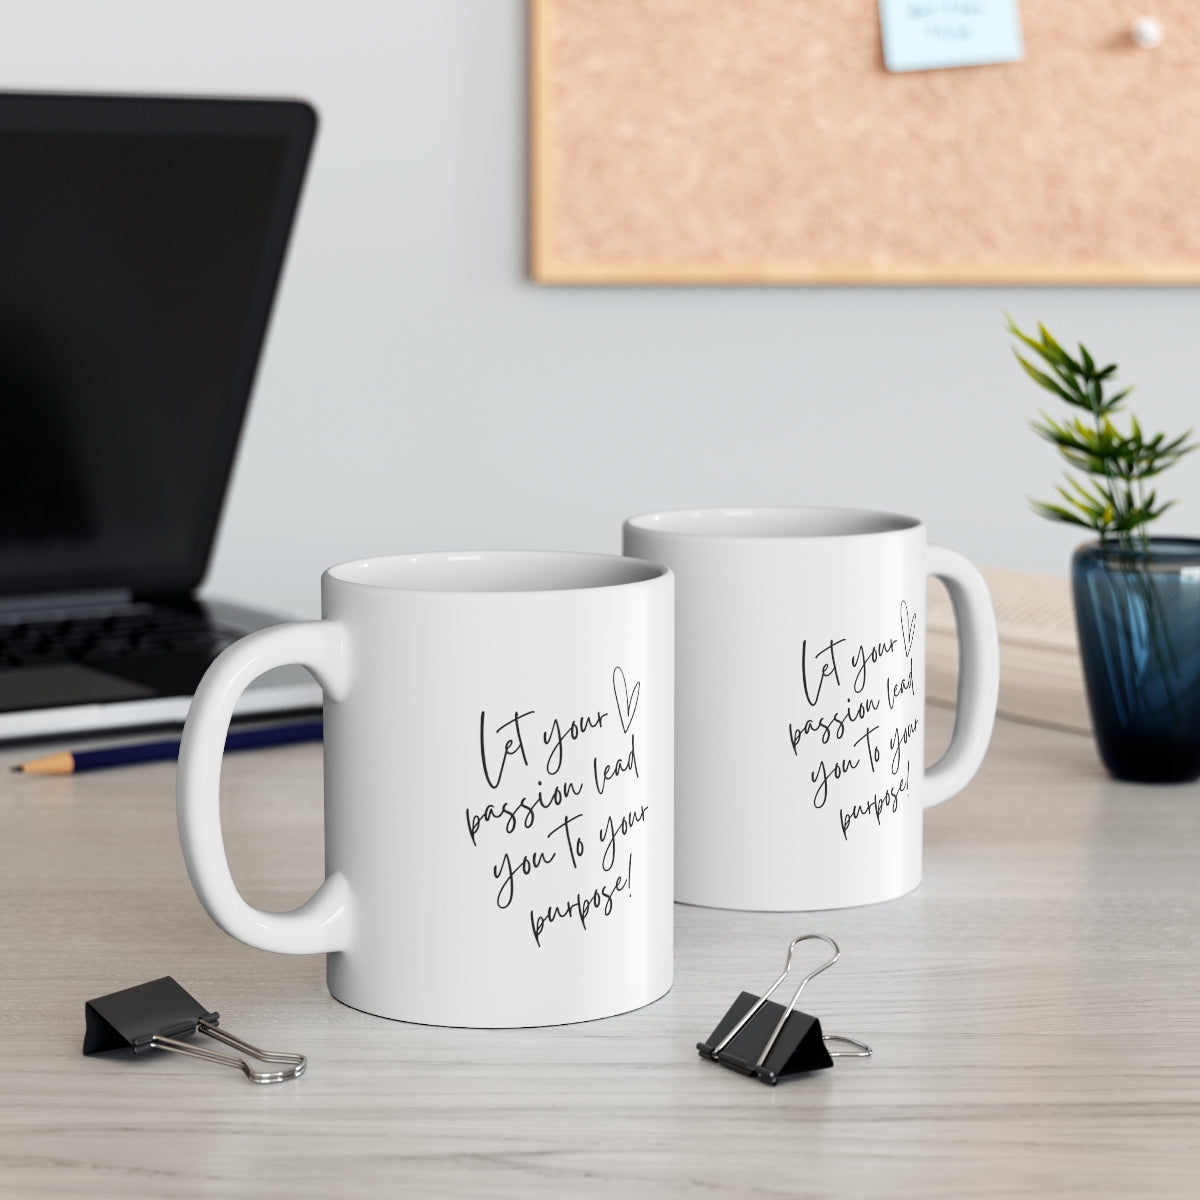 Let Your Passion Mug Double Sided White Ceramic Coffee Tea Mug- Inspirational Birthday Gift, Motivational Mug, Daily Affirmation Mug, Self Care Gift